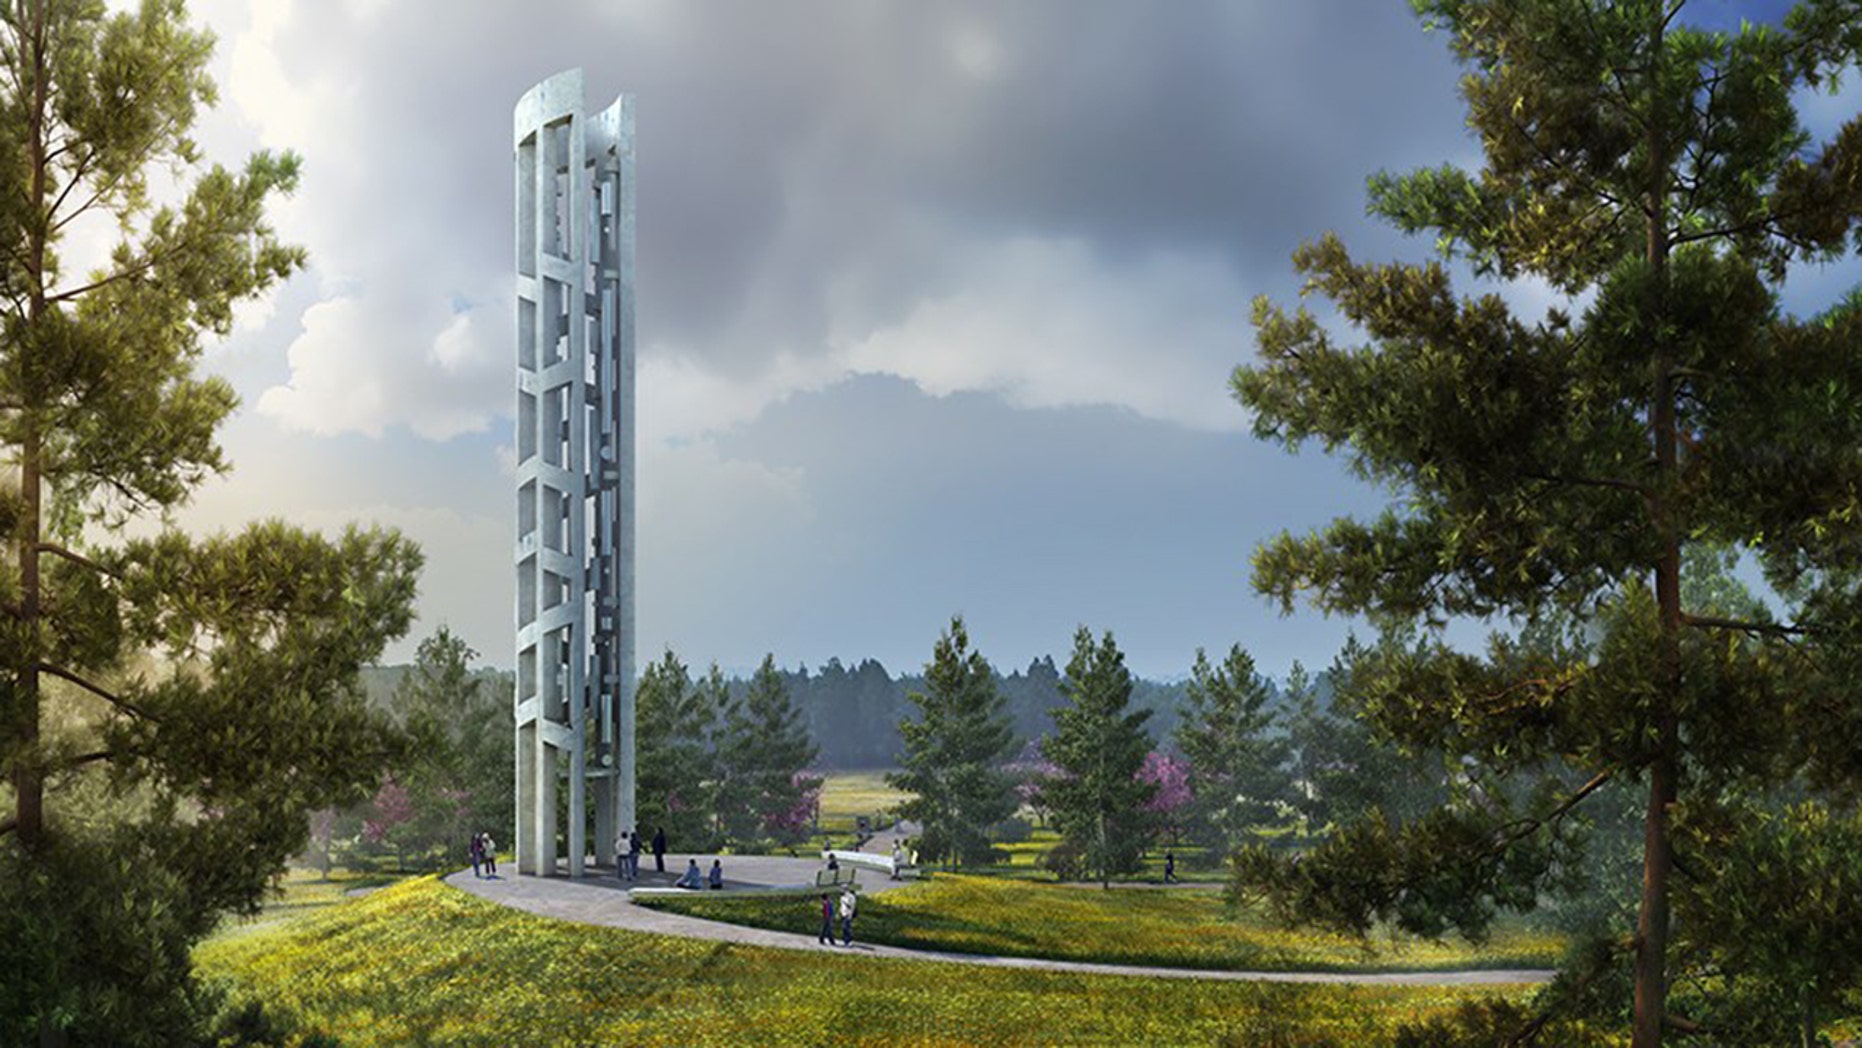 Groundbreaking Tower Of Voices Flight 93 Memorial Erected Ahead Of 9 11 Anniversary Fox News